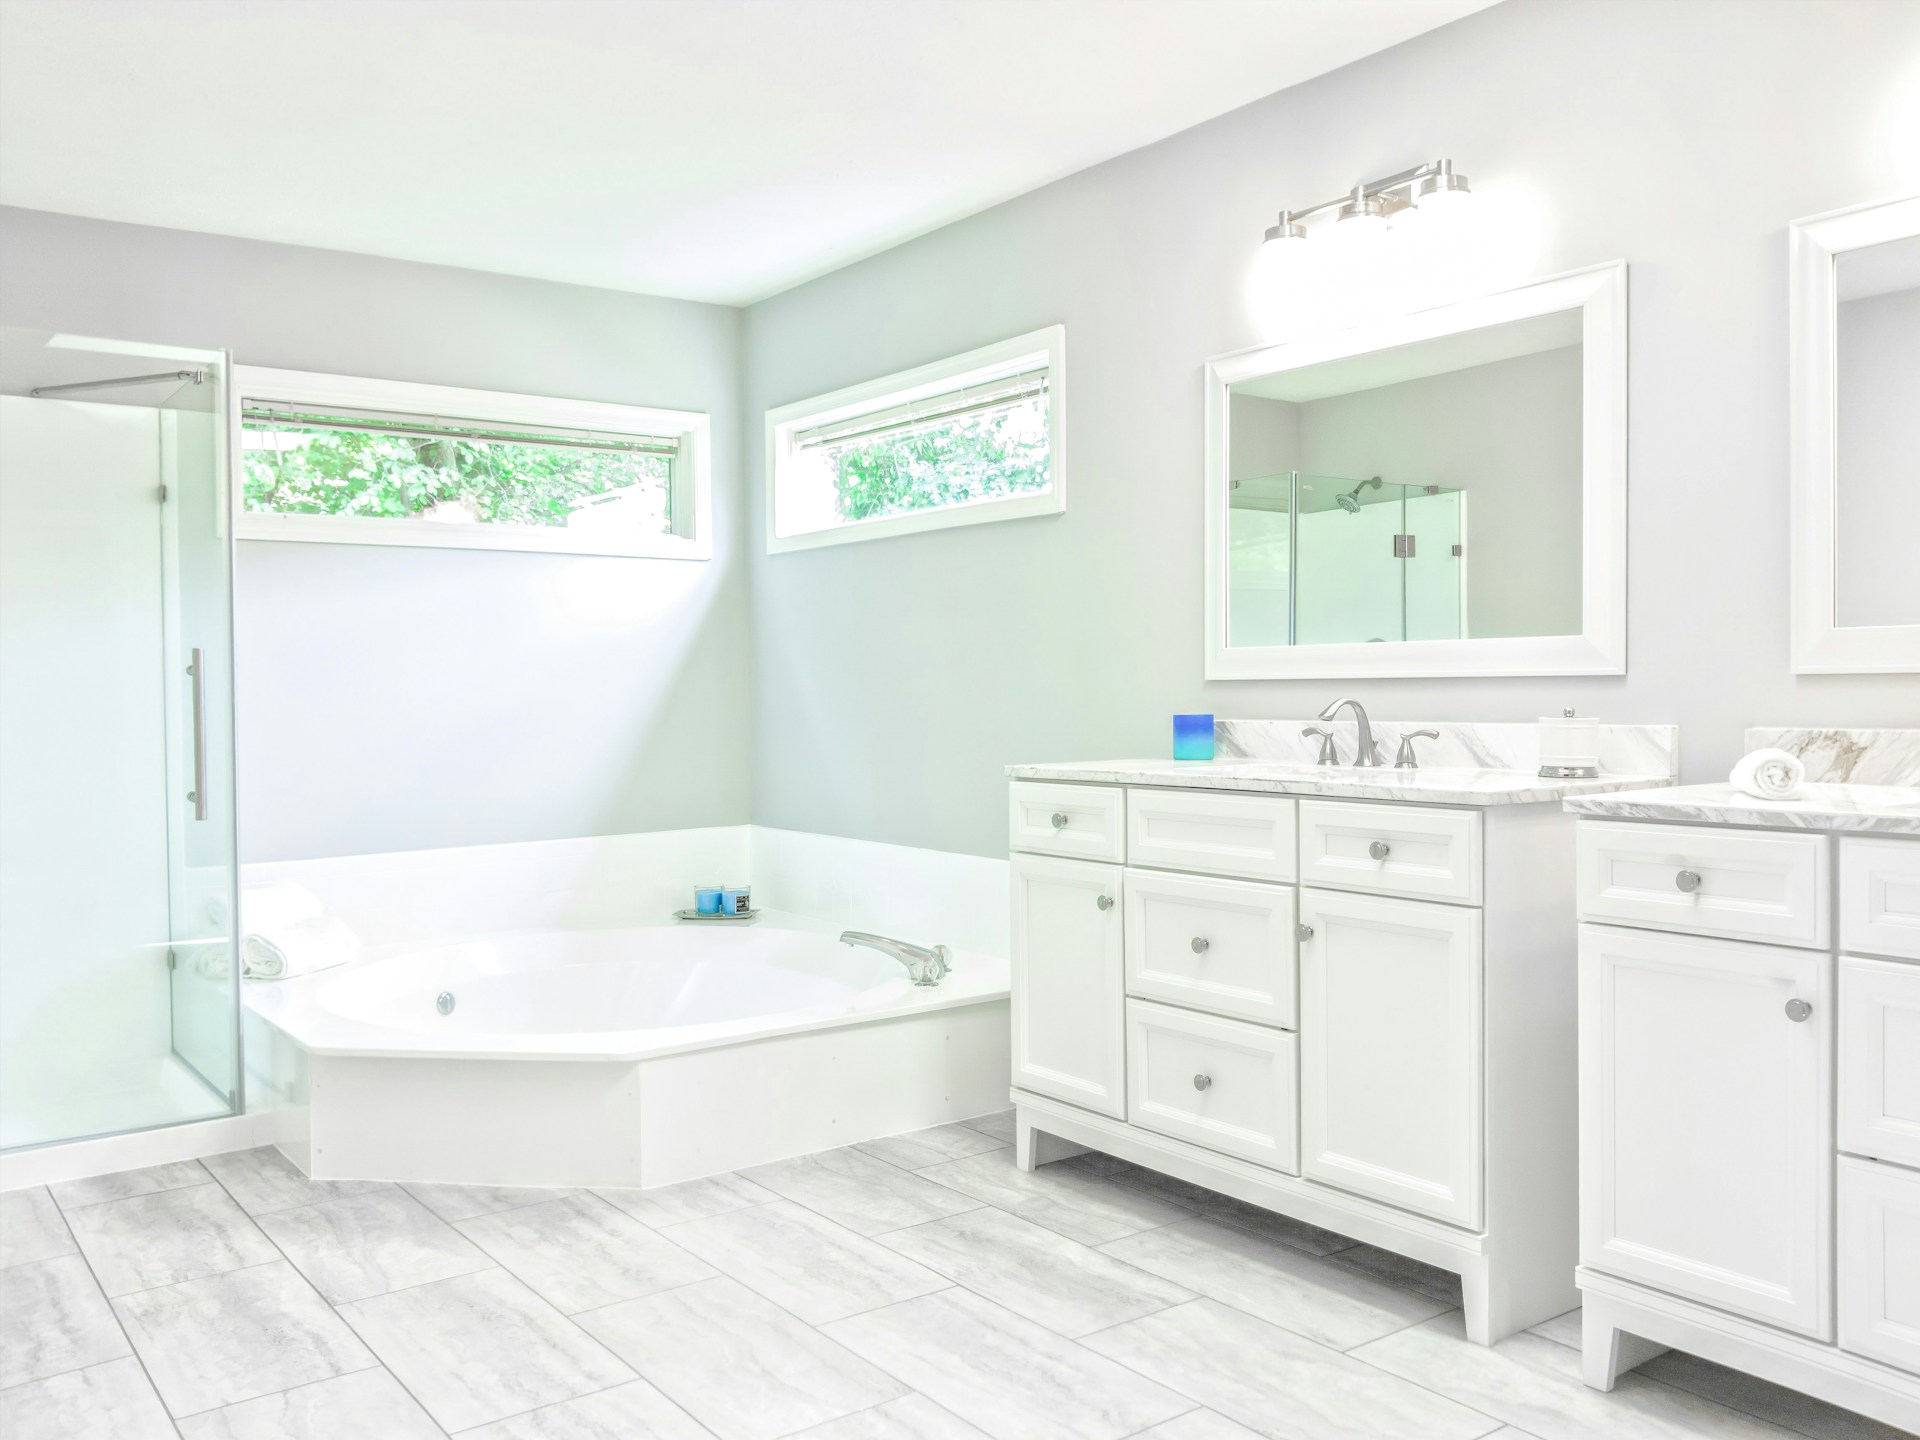 How P Shaped Baths can Transform your Bathroom